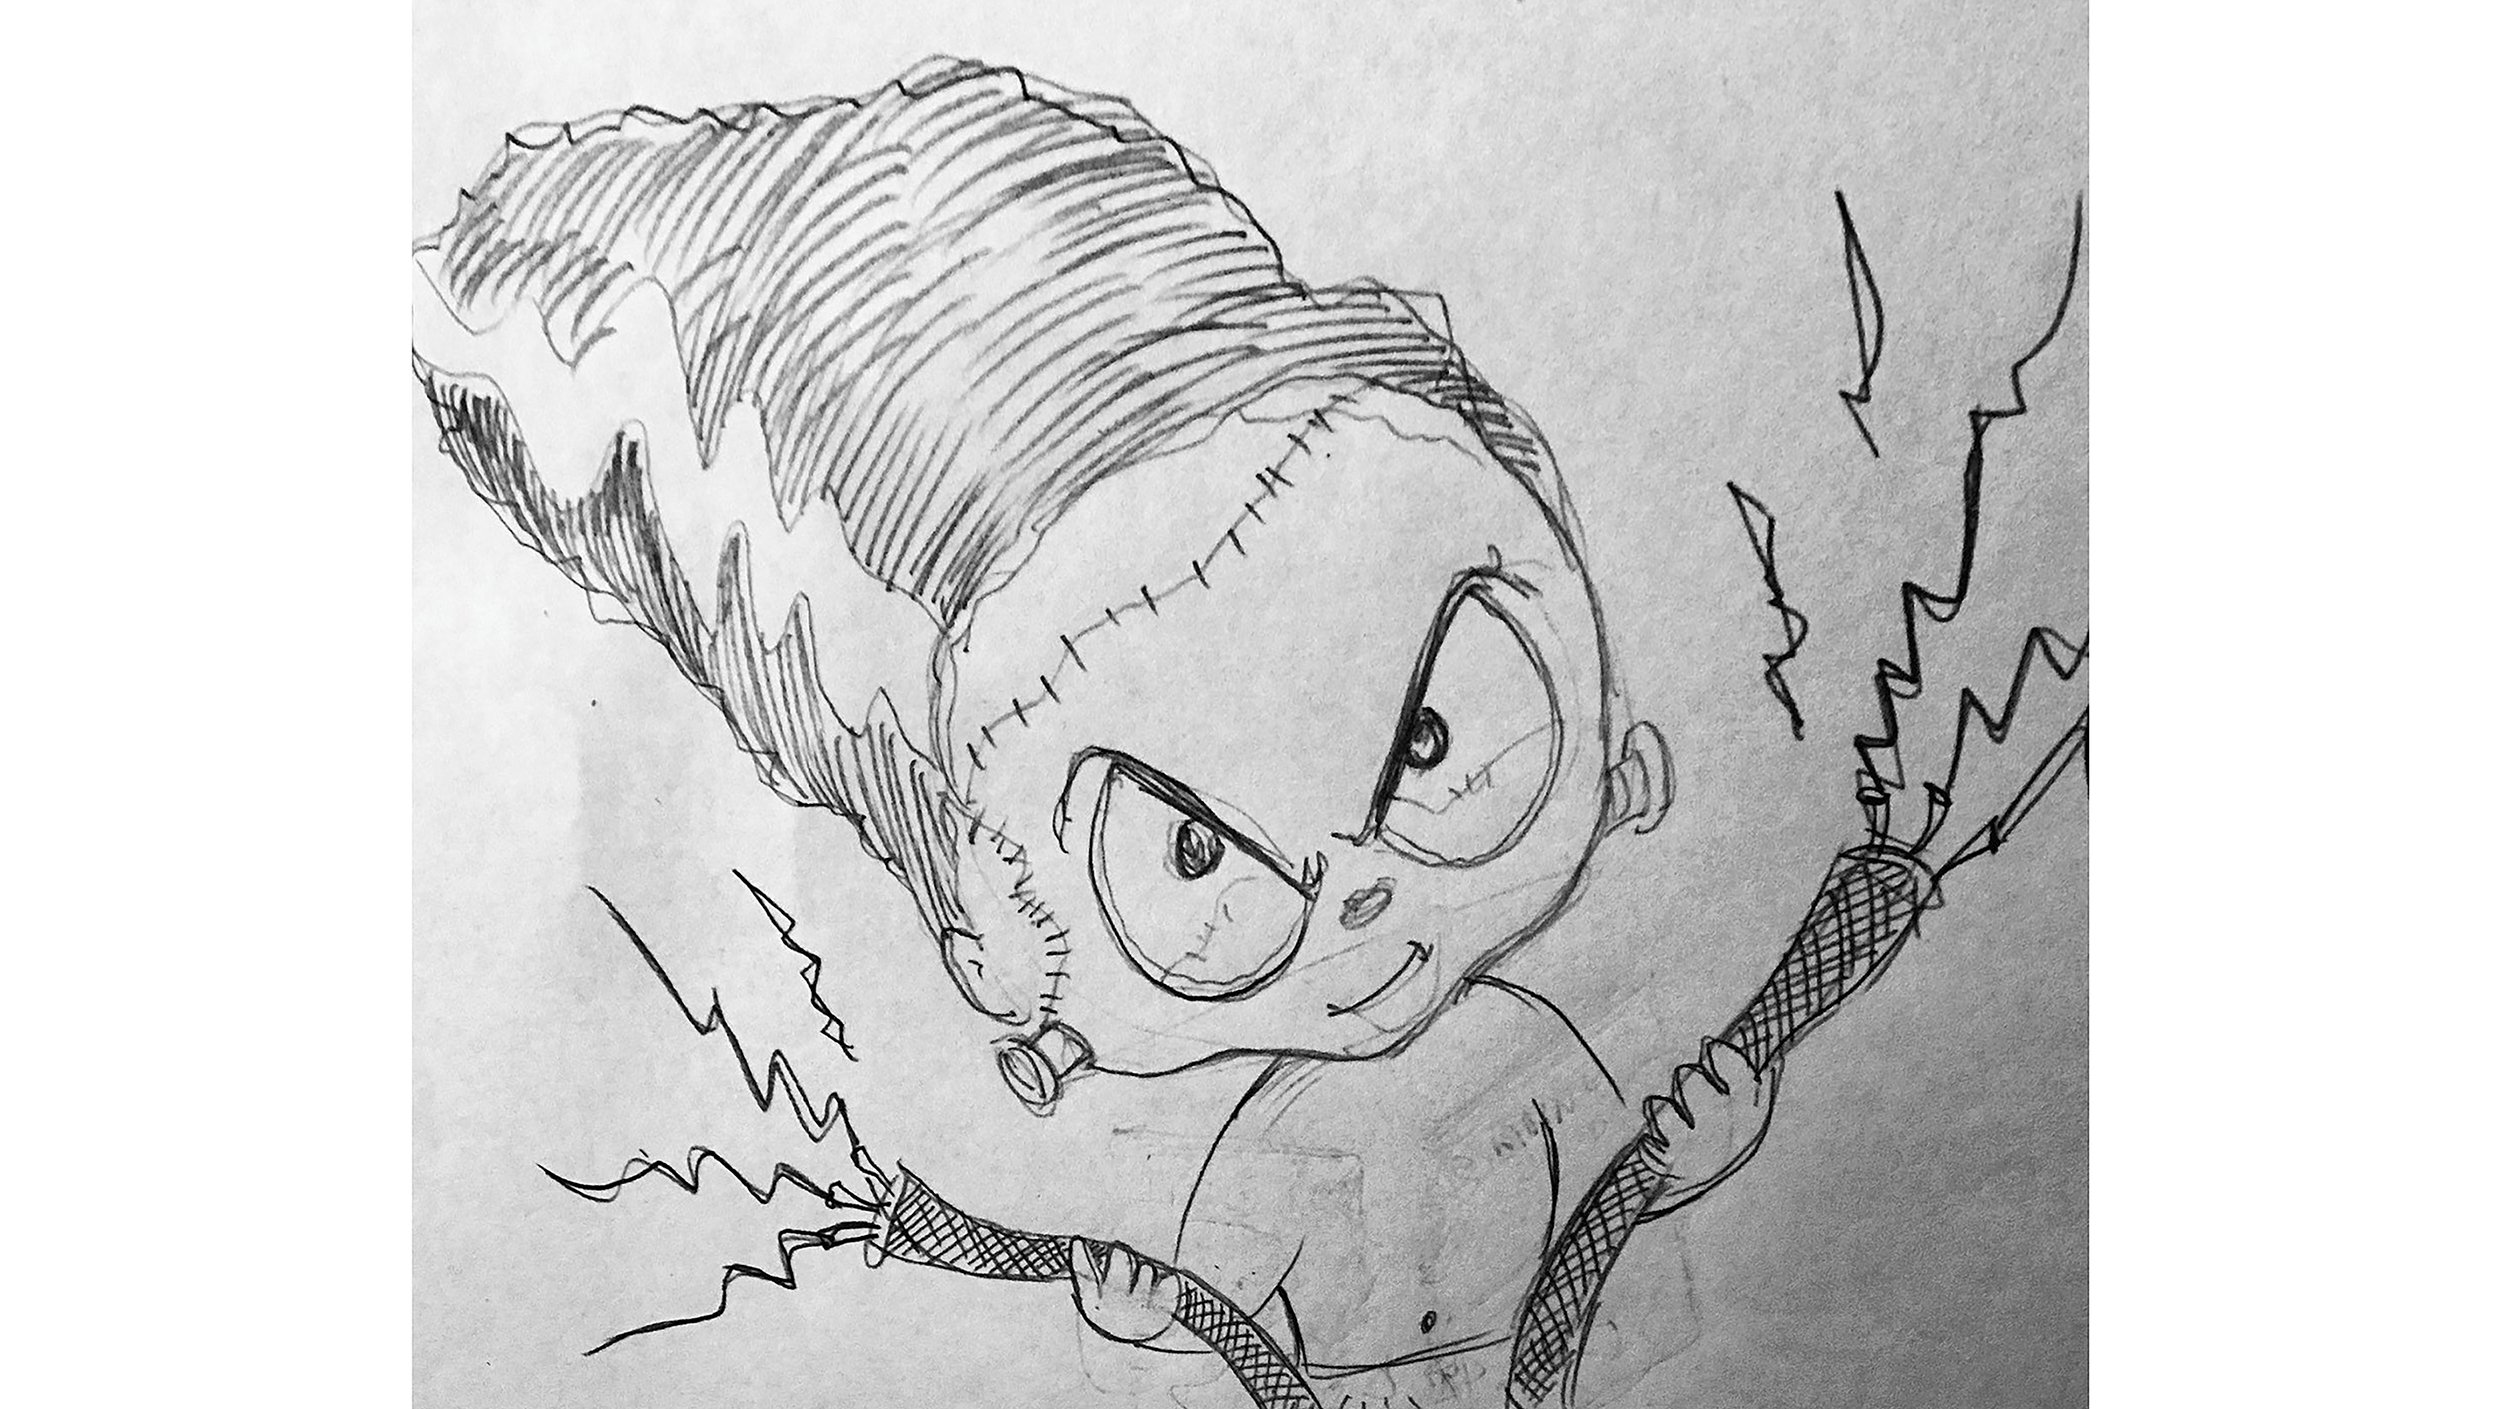 C_Little Monsters_Bride of Frankenstein_Sketch_sRGB2500.jpg